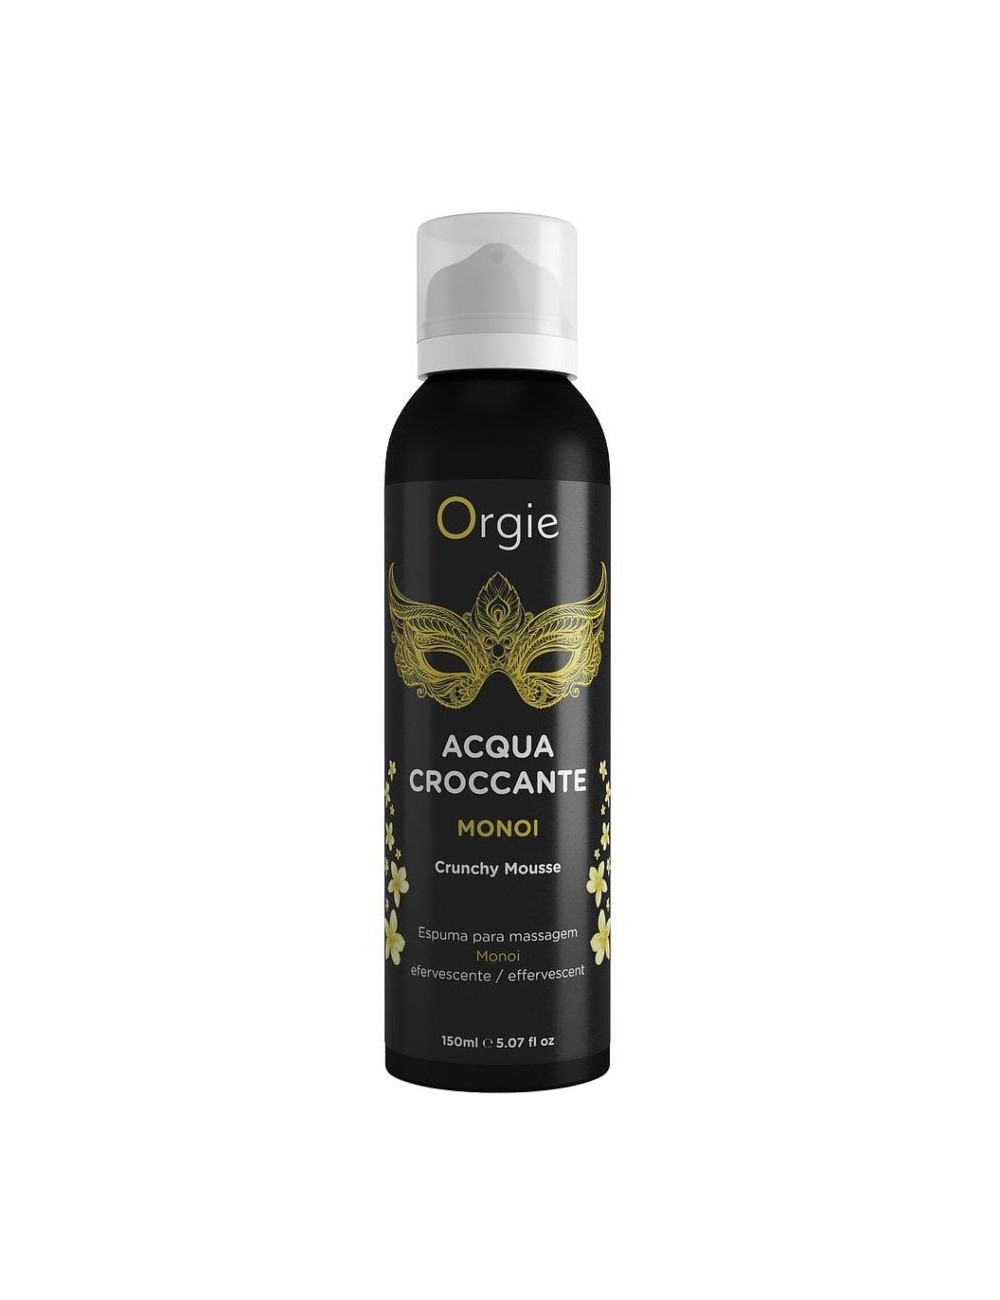 Orgie mousse hydratante effervescente monoi scent 150 ml - Huiles de massage - Orgie